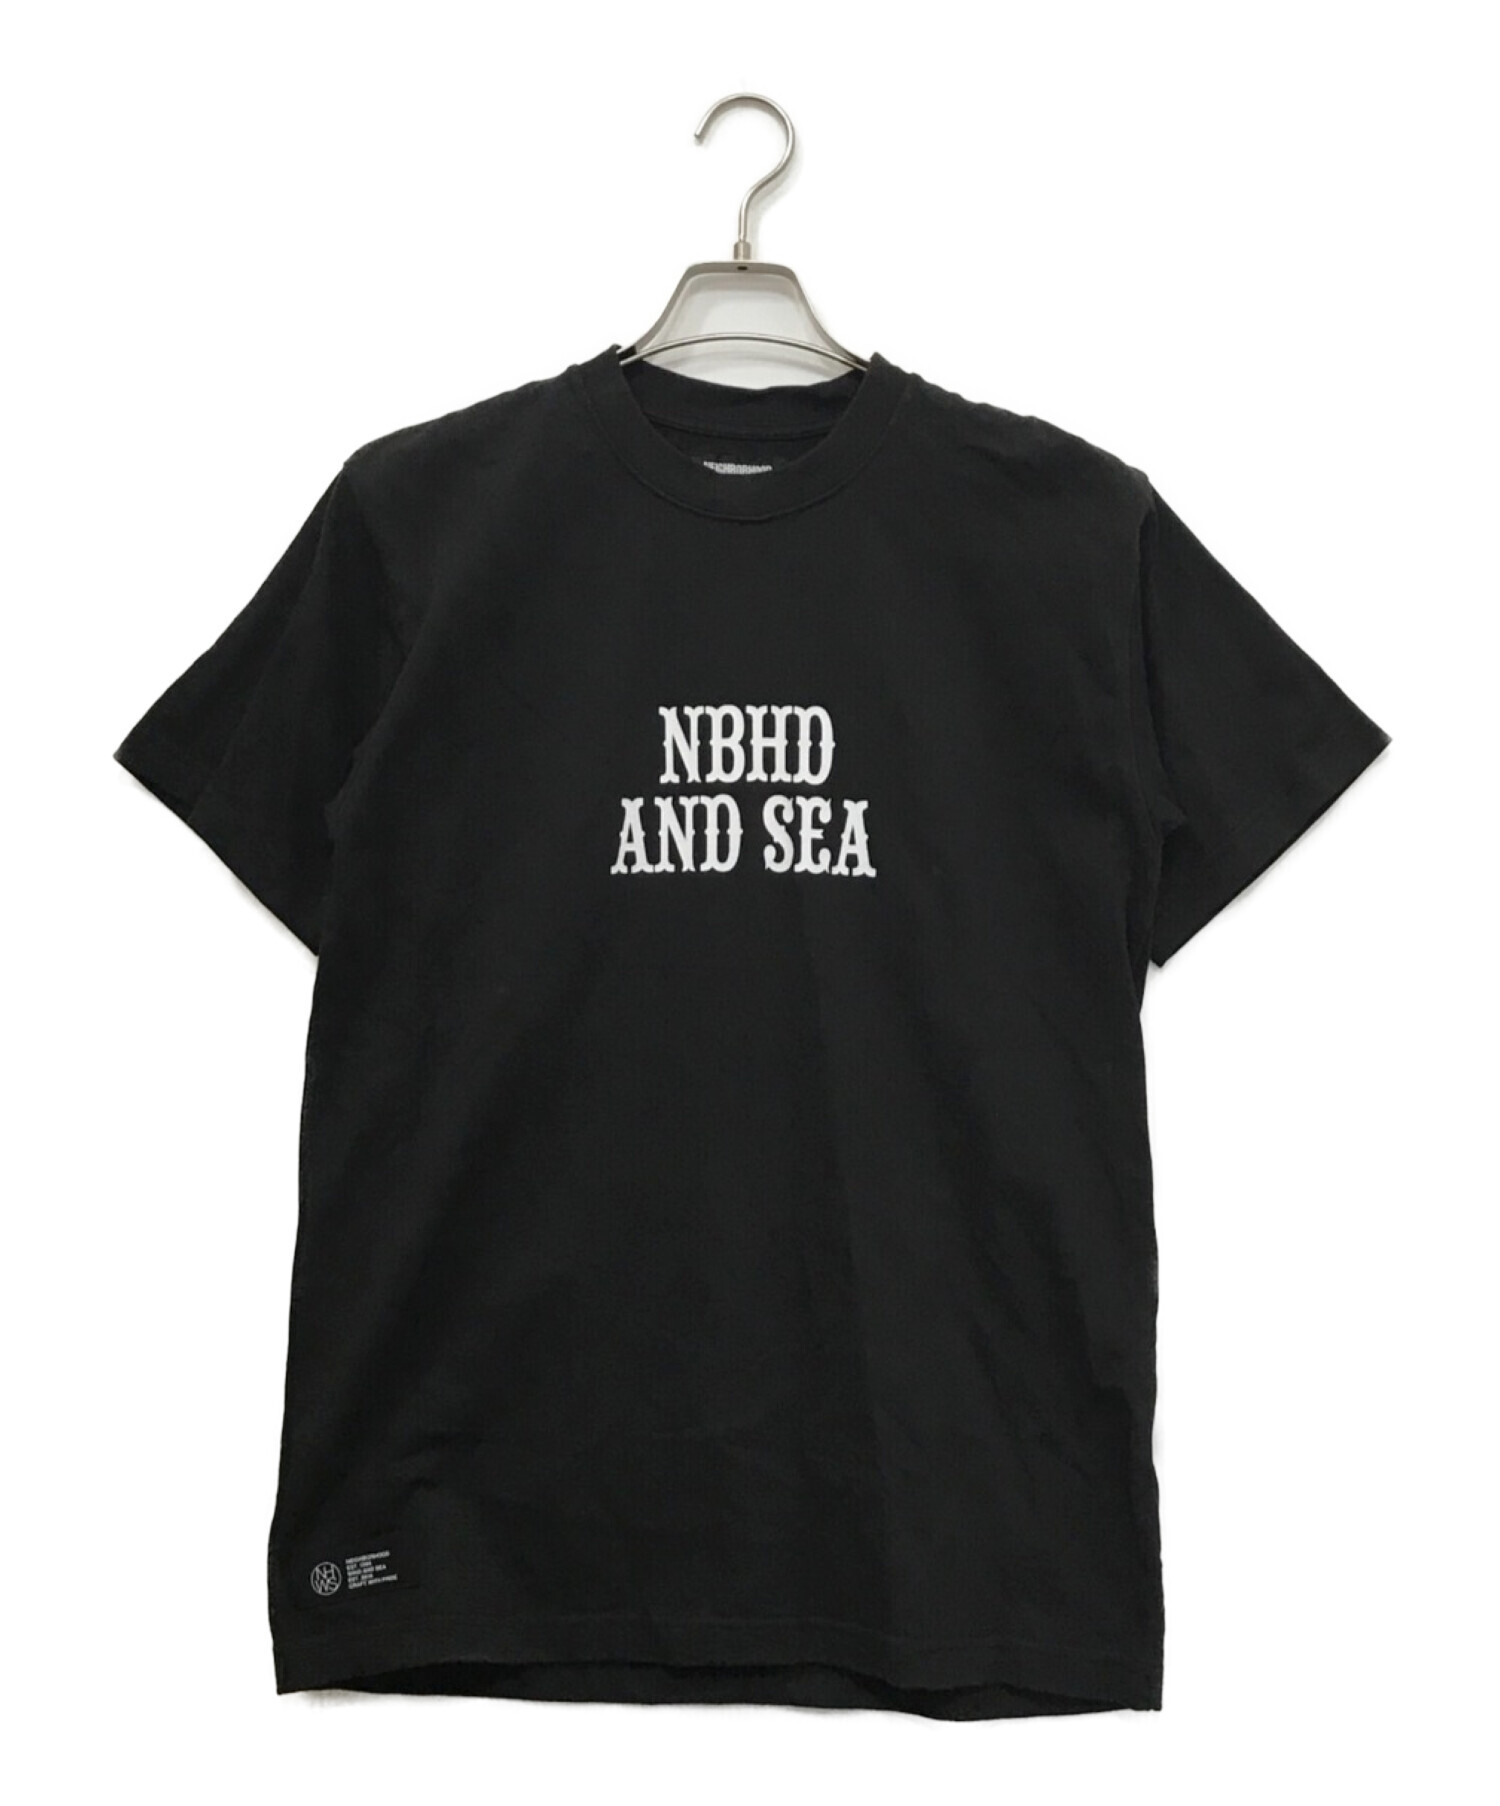 WIND AND SEA×NEIGHBORHOOD Tシャツ Mトップス - Tシャツ/カットソー 